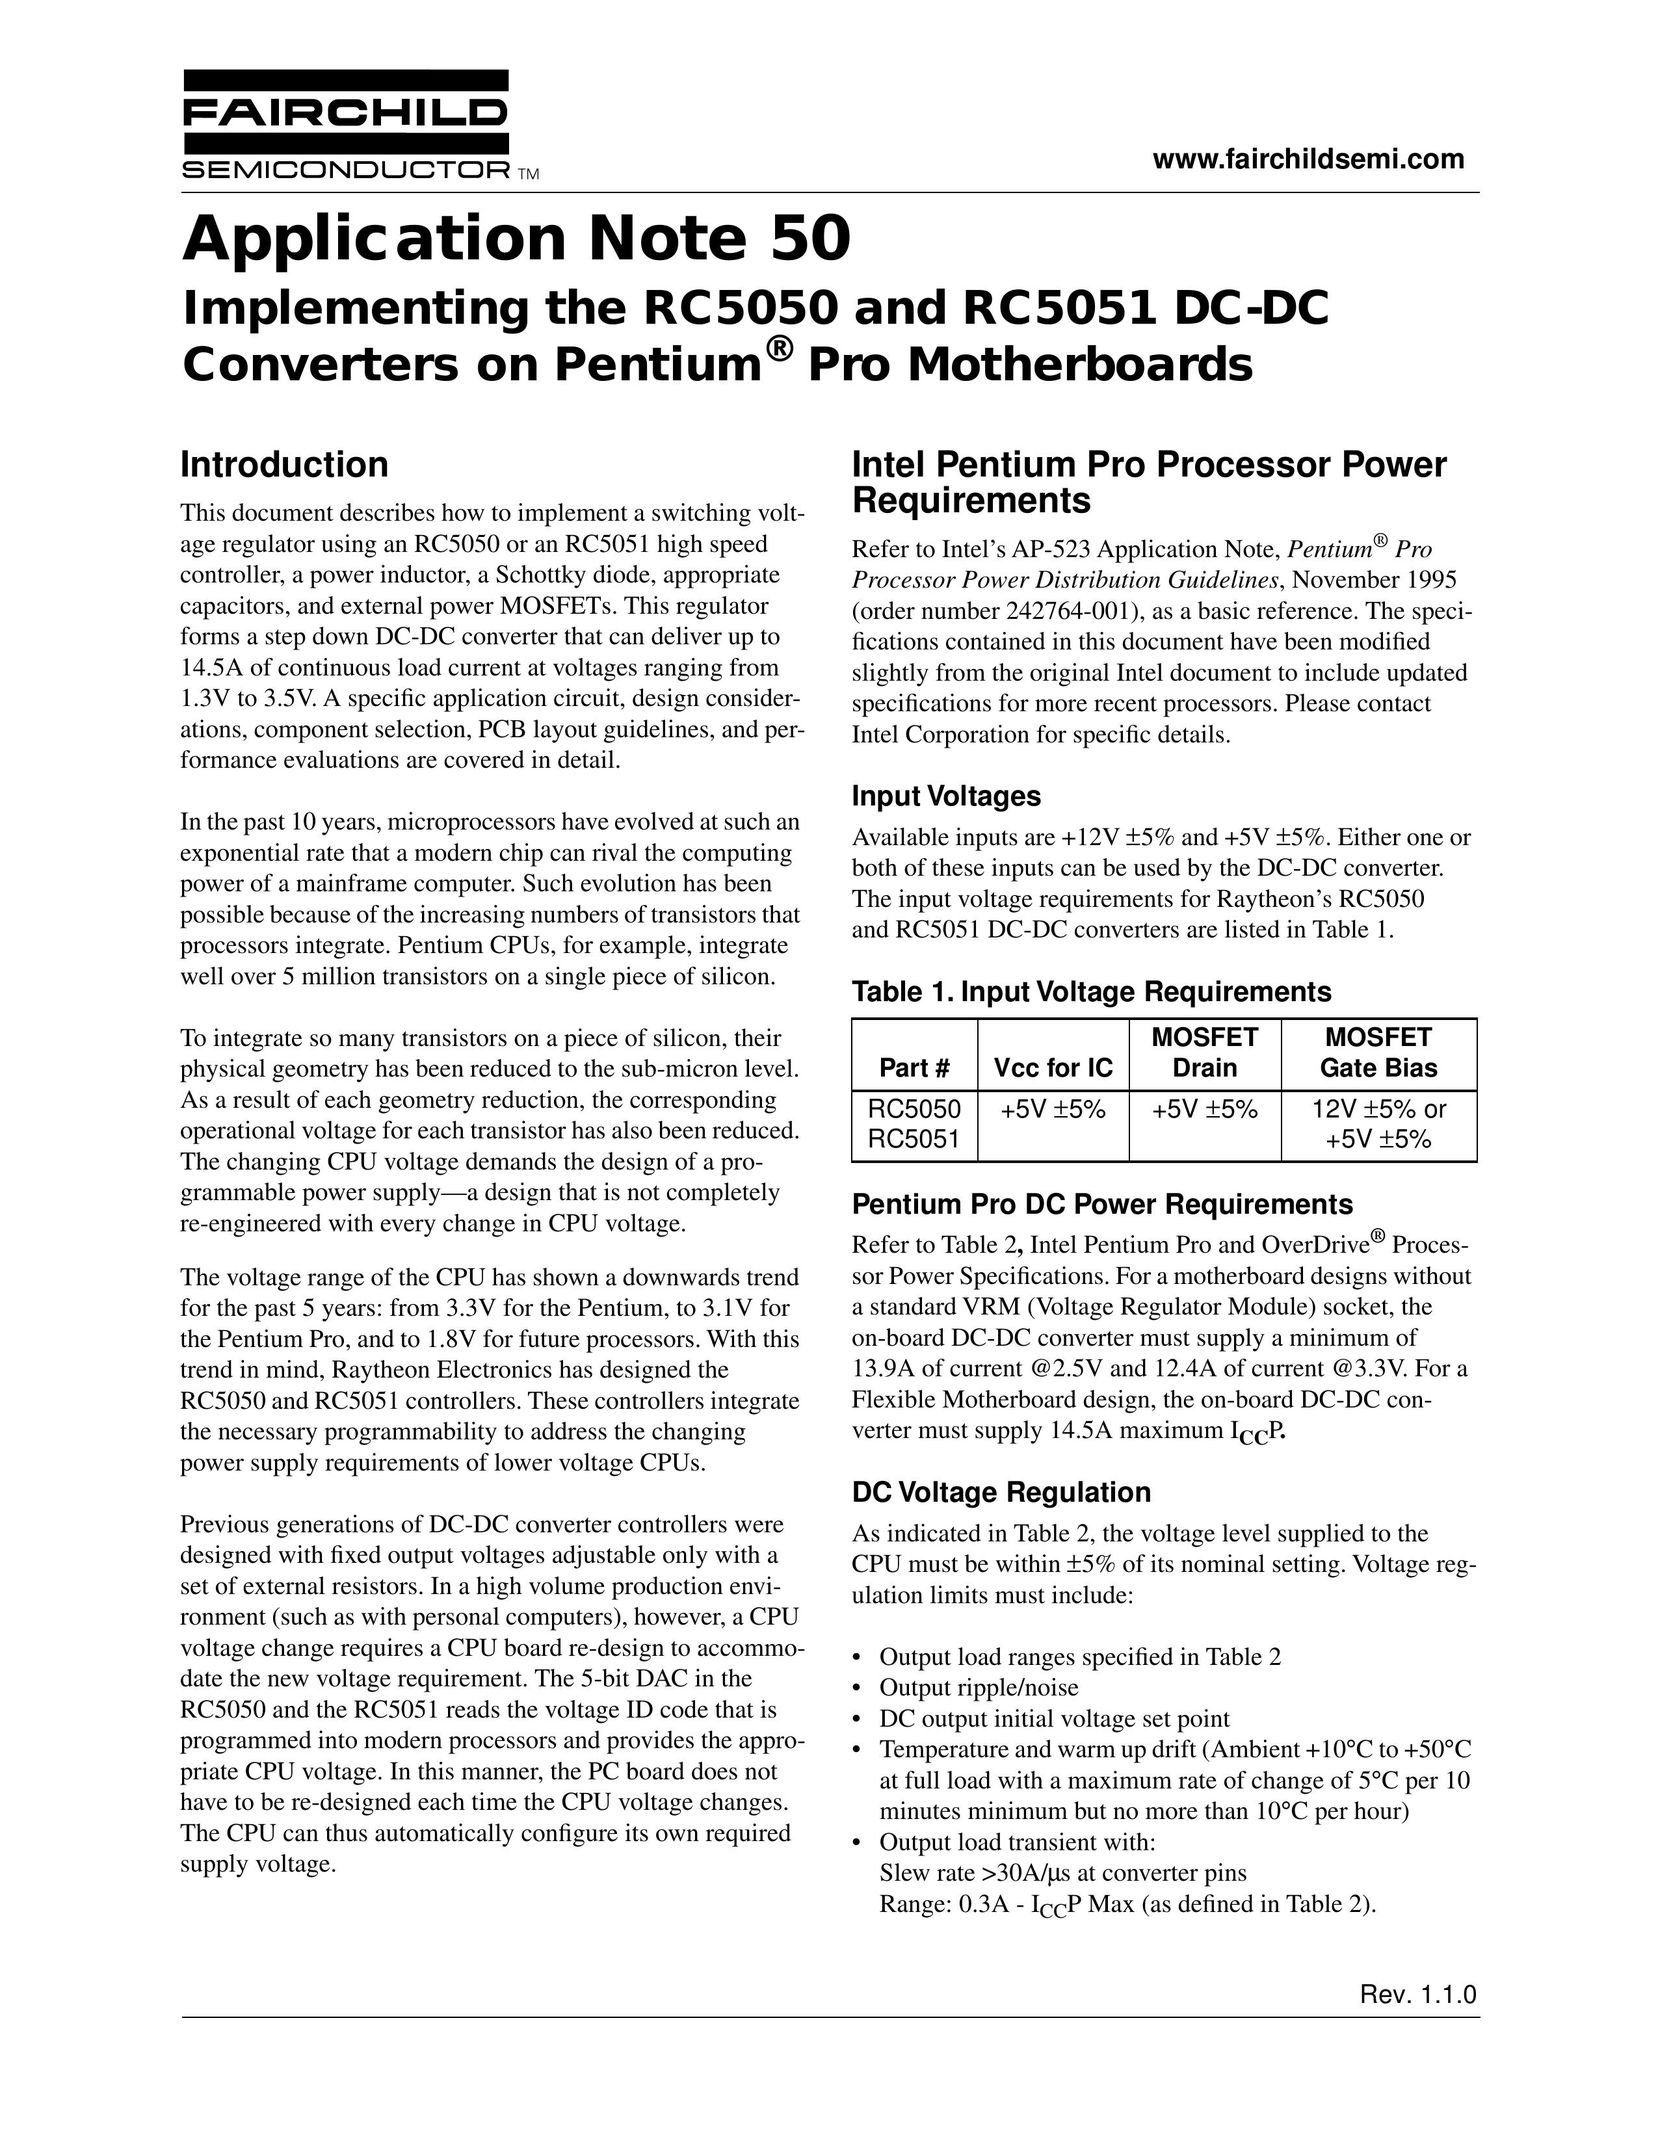 Fairchild RC5050 Computer Hardware User Manual